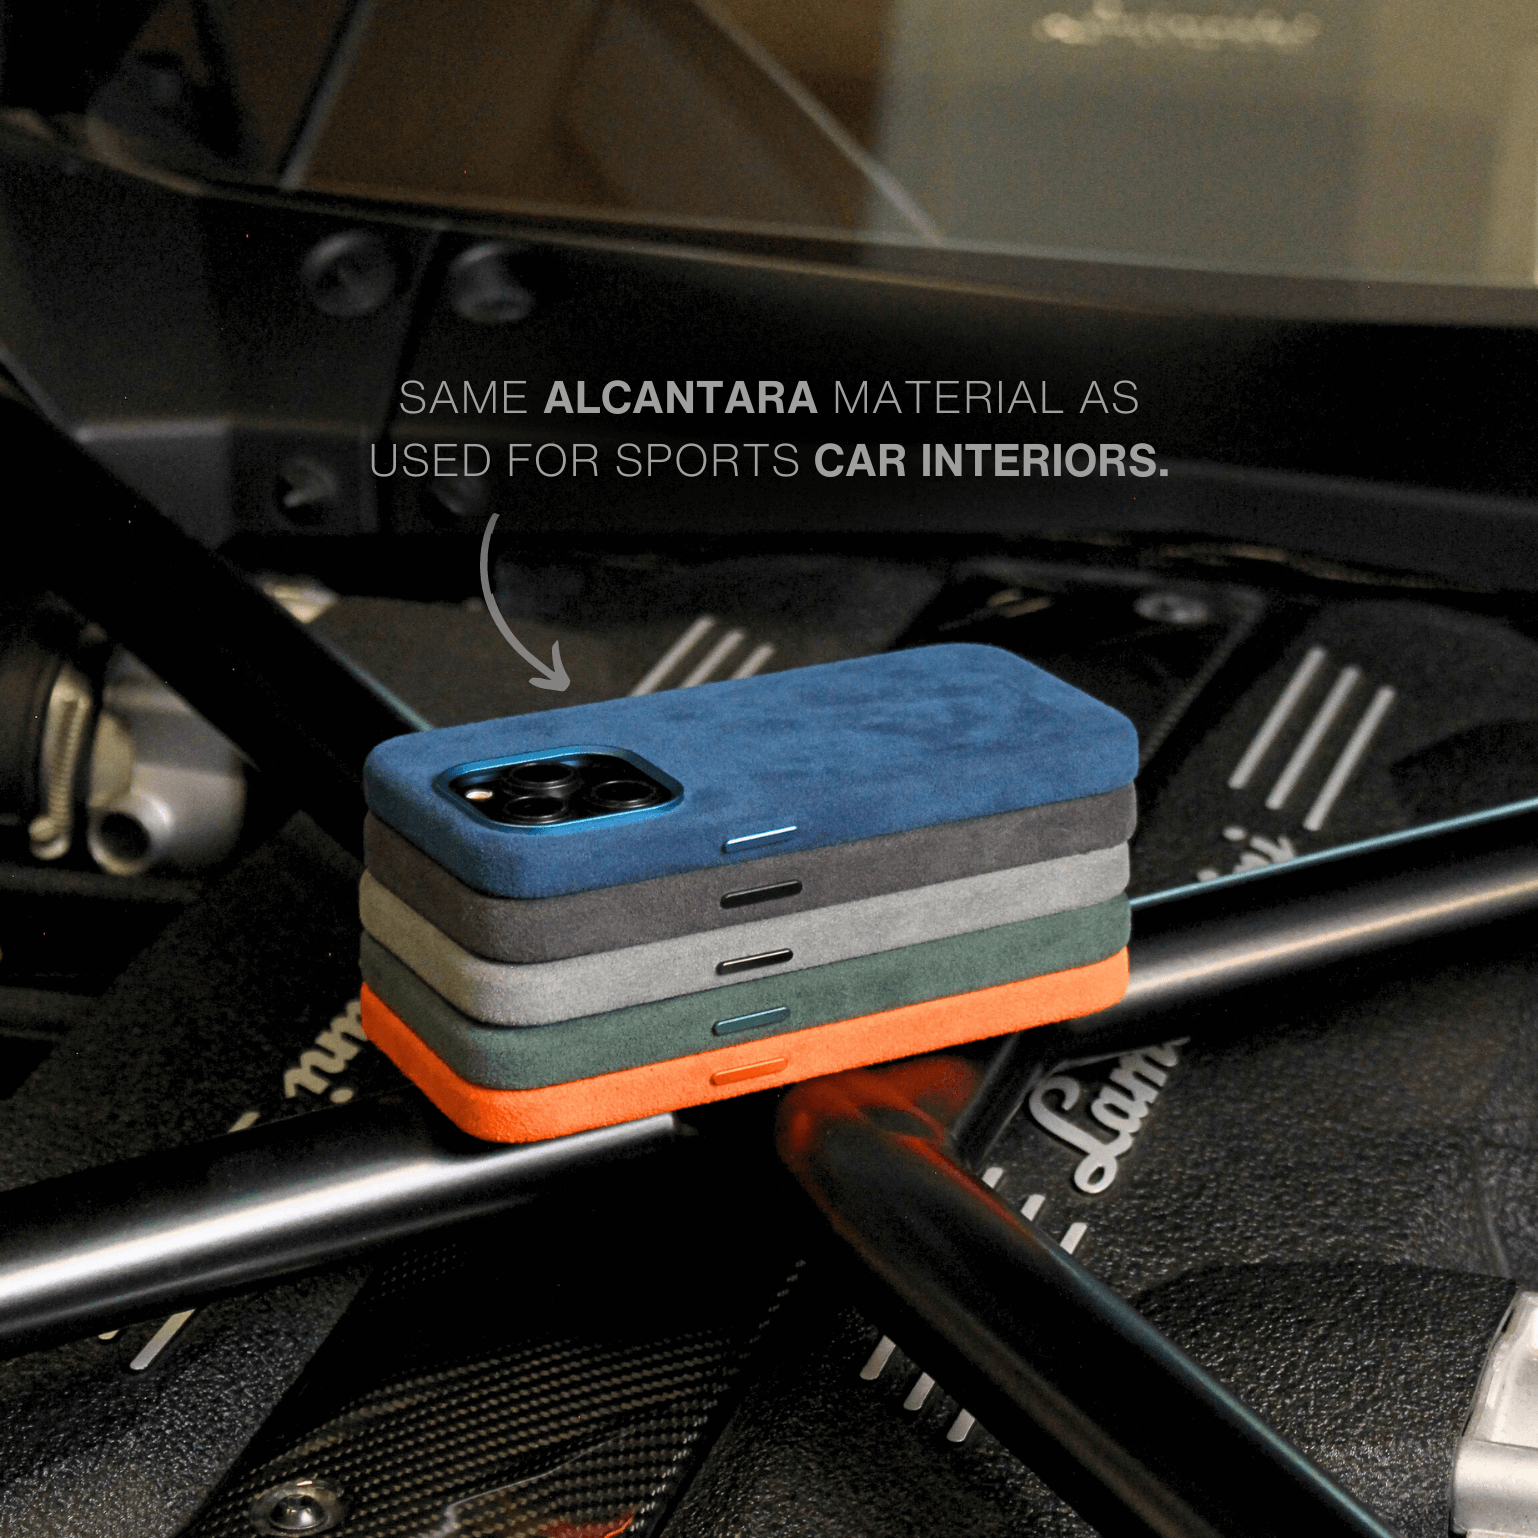 Alcantara iPhone Case + AirPod Case - Midnight Blue Edition